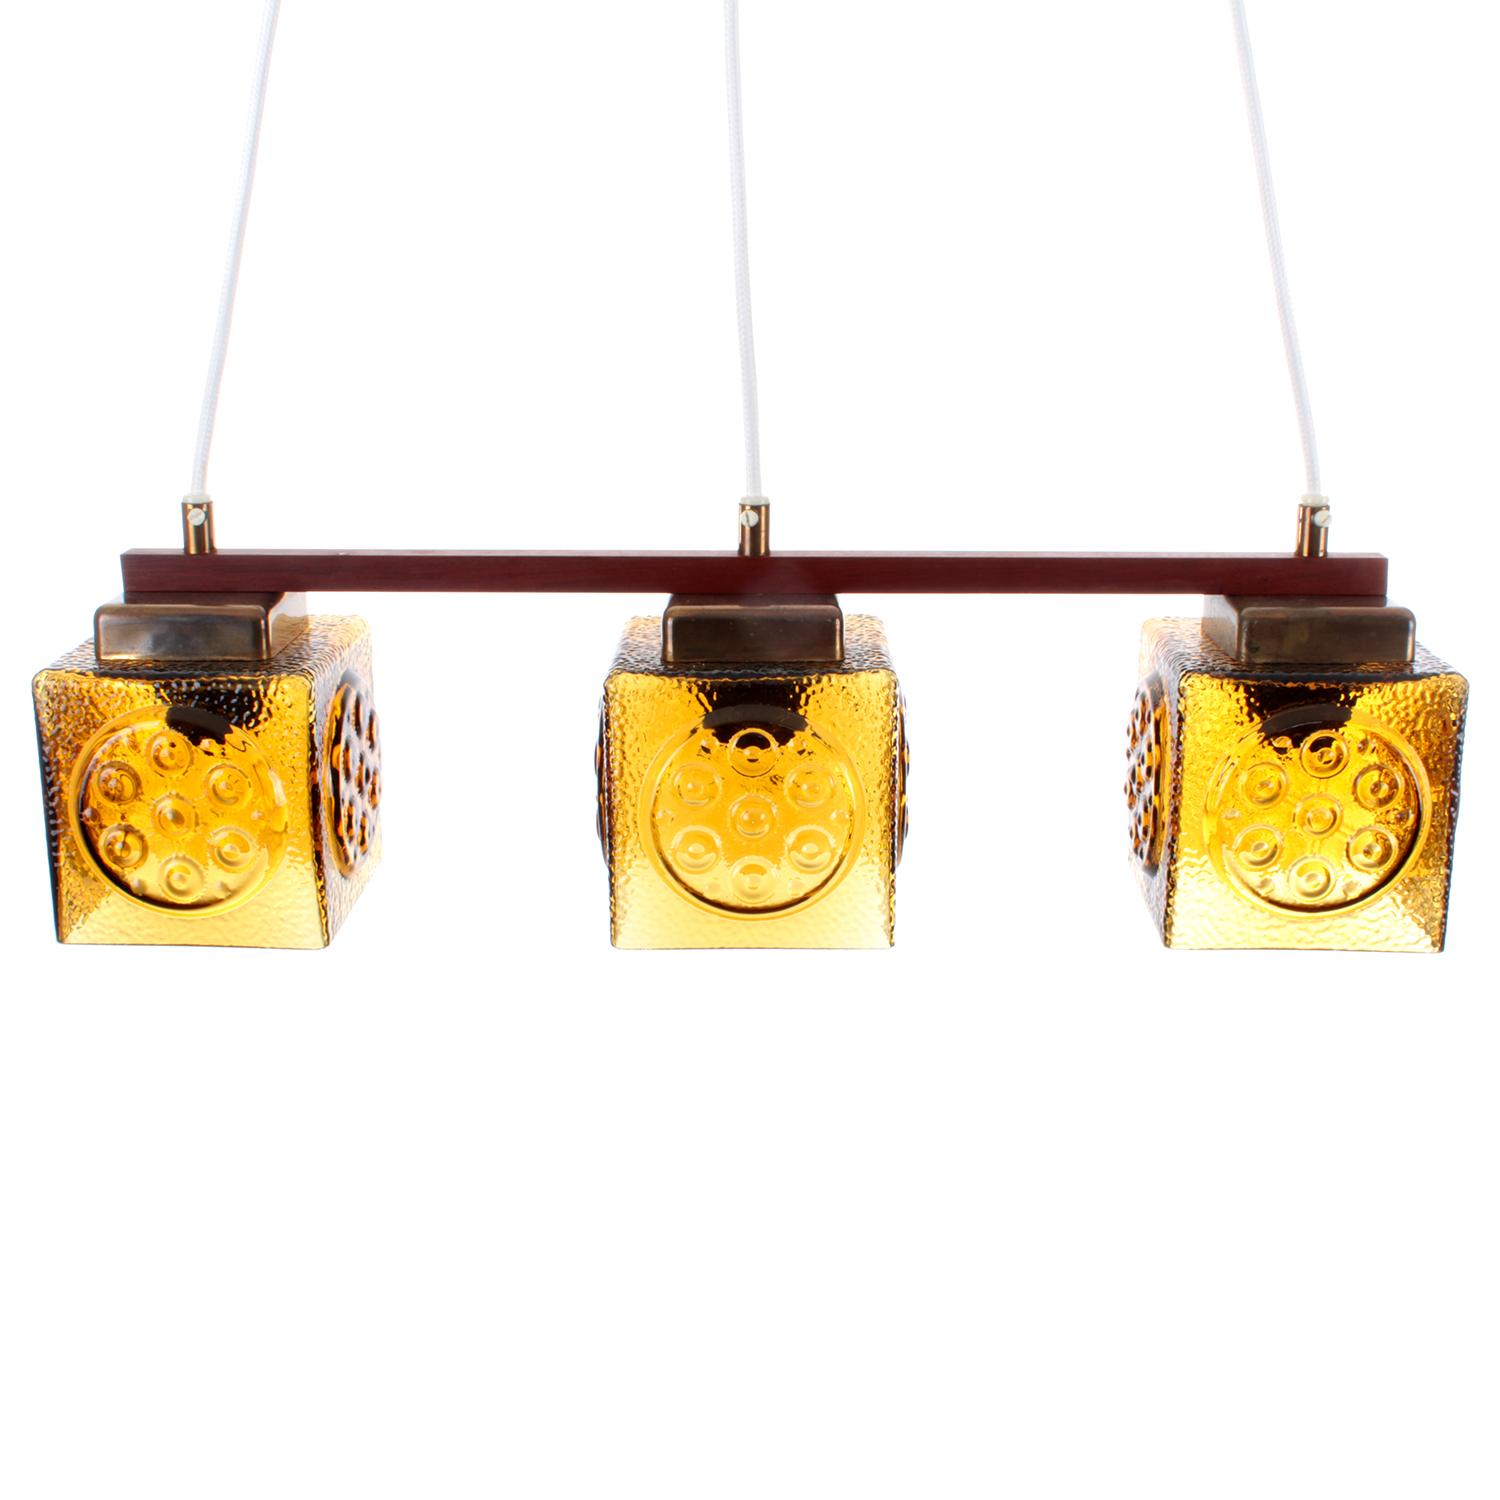 Mid-Century Modern Amber Glass Hanging Light-Fixture from the 1960s, Scandinavia